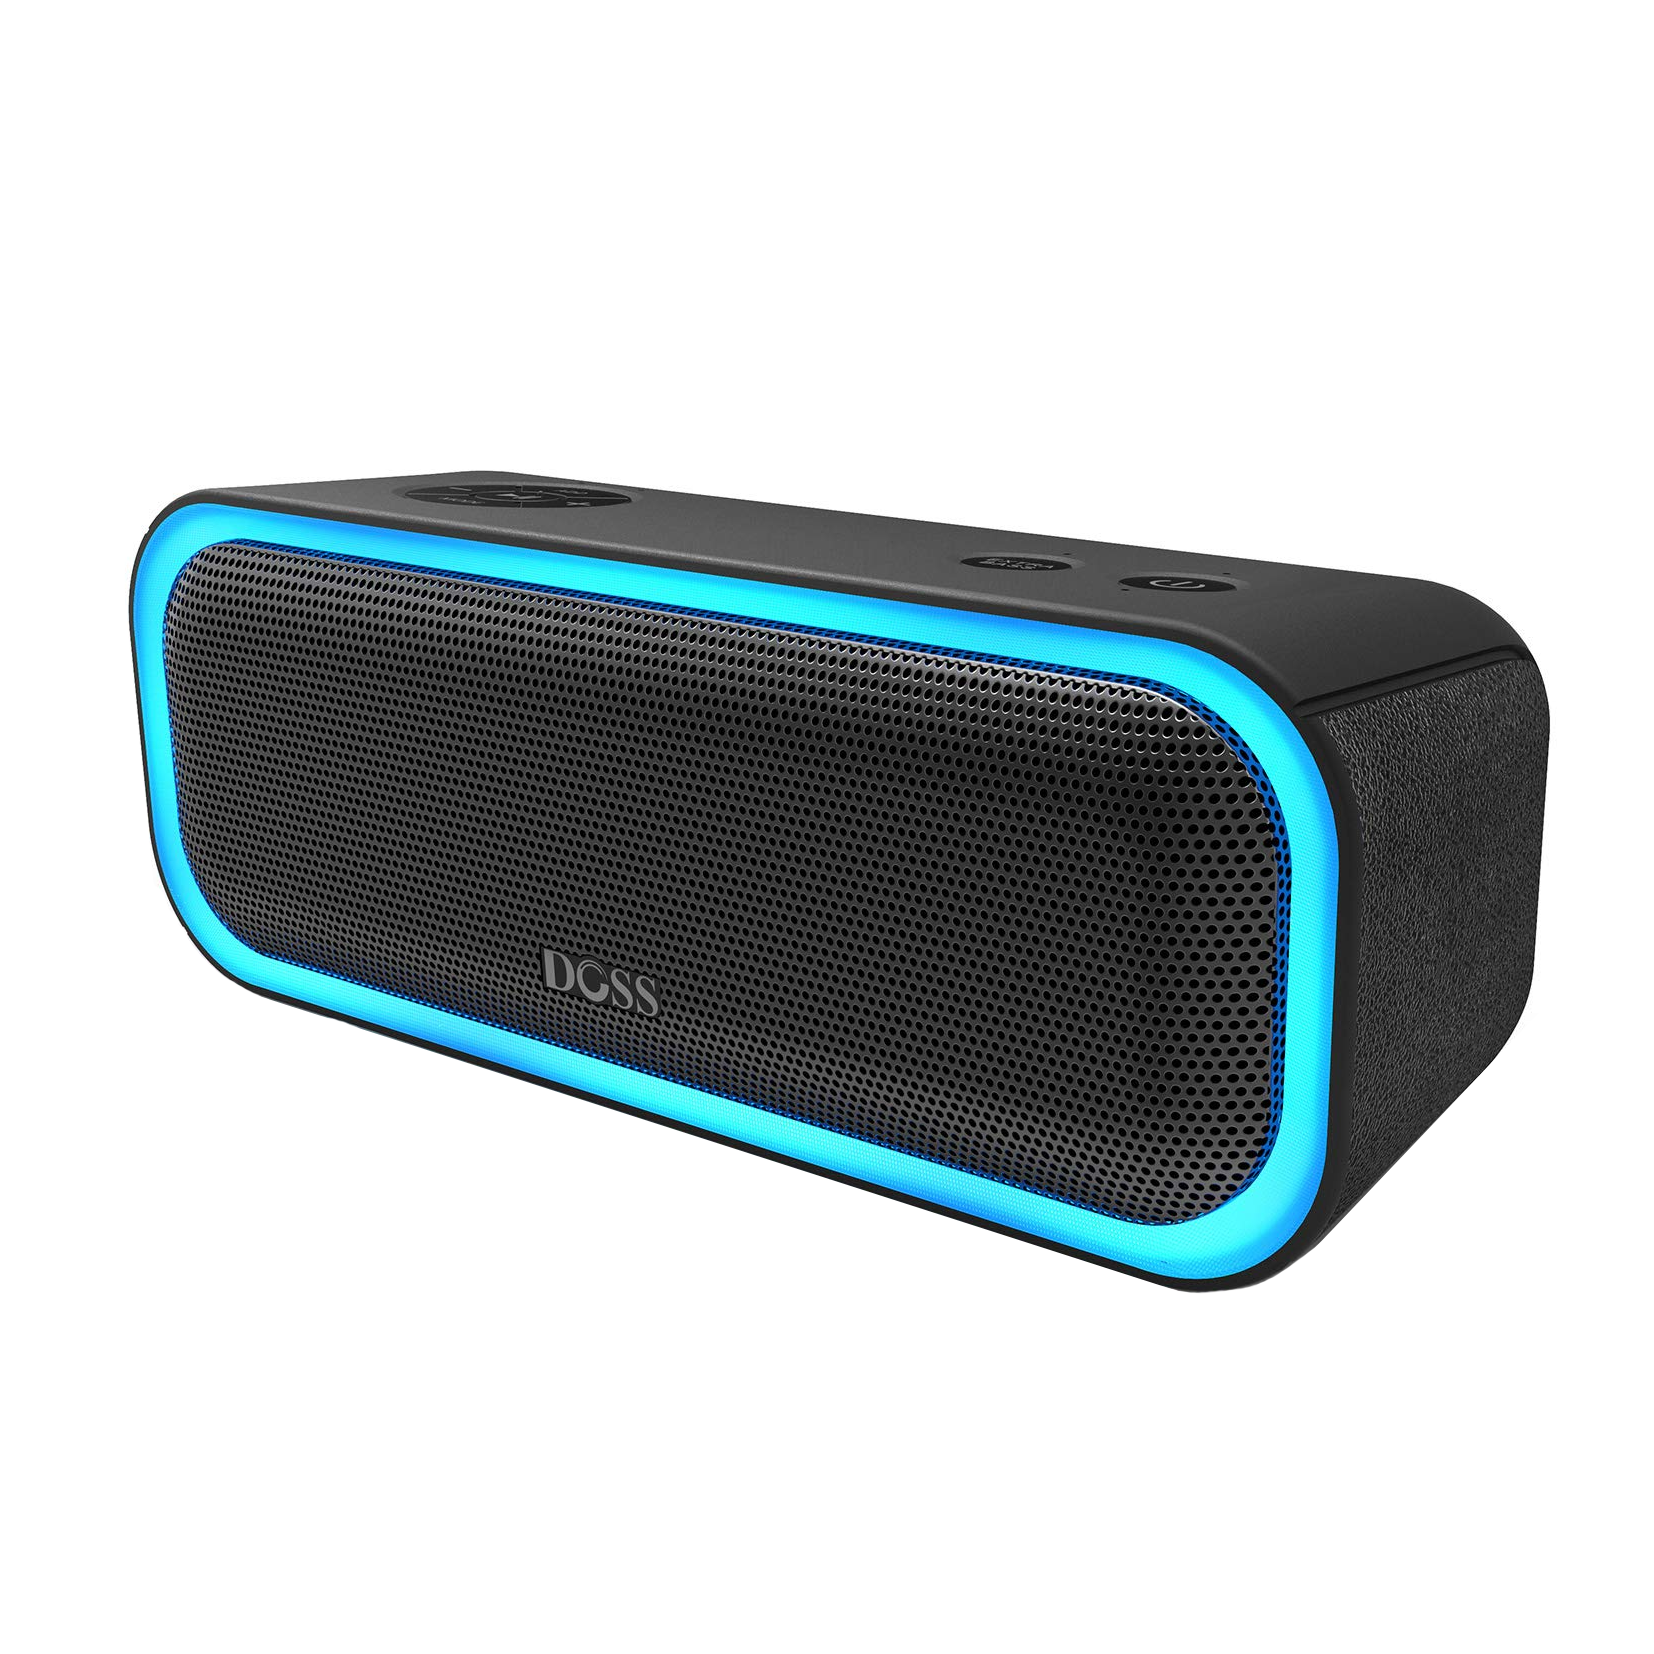 Plug-in Bluetooth speaker brings high-quality audio anywhere